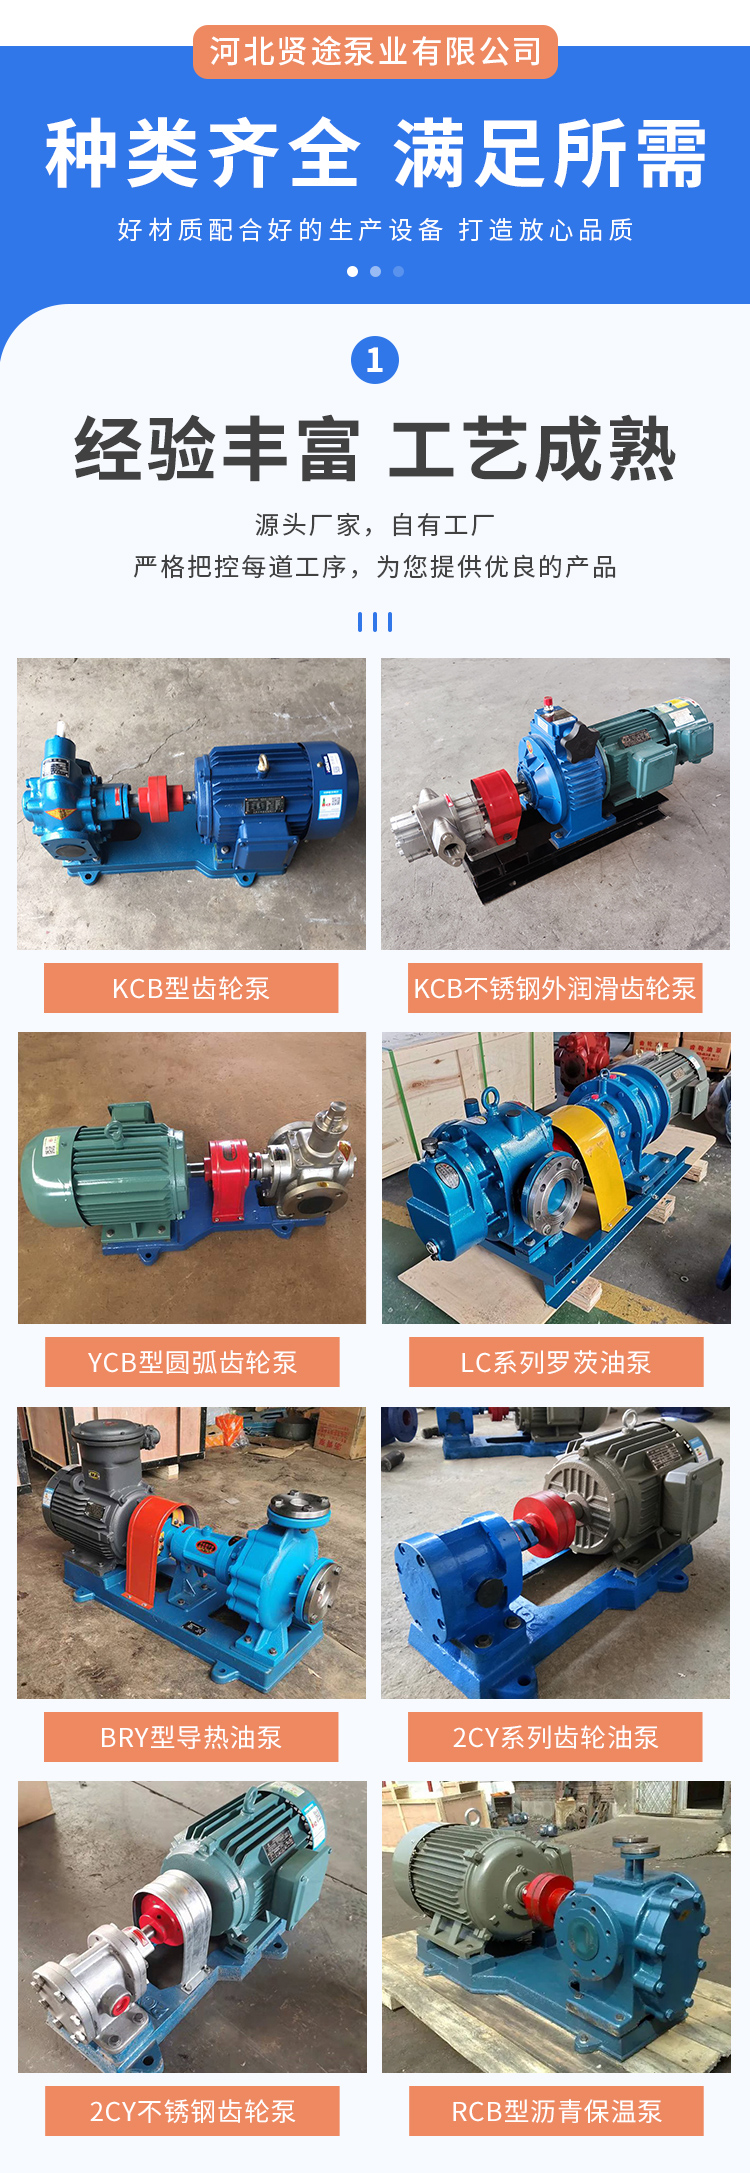 YCB circular arc gear pump, fuel lubricating oil delivery pump, horizontal high flow gasoline diesel oil pump